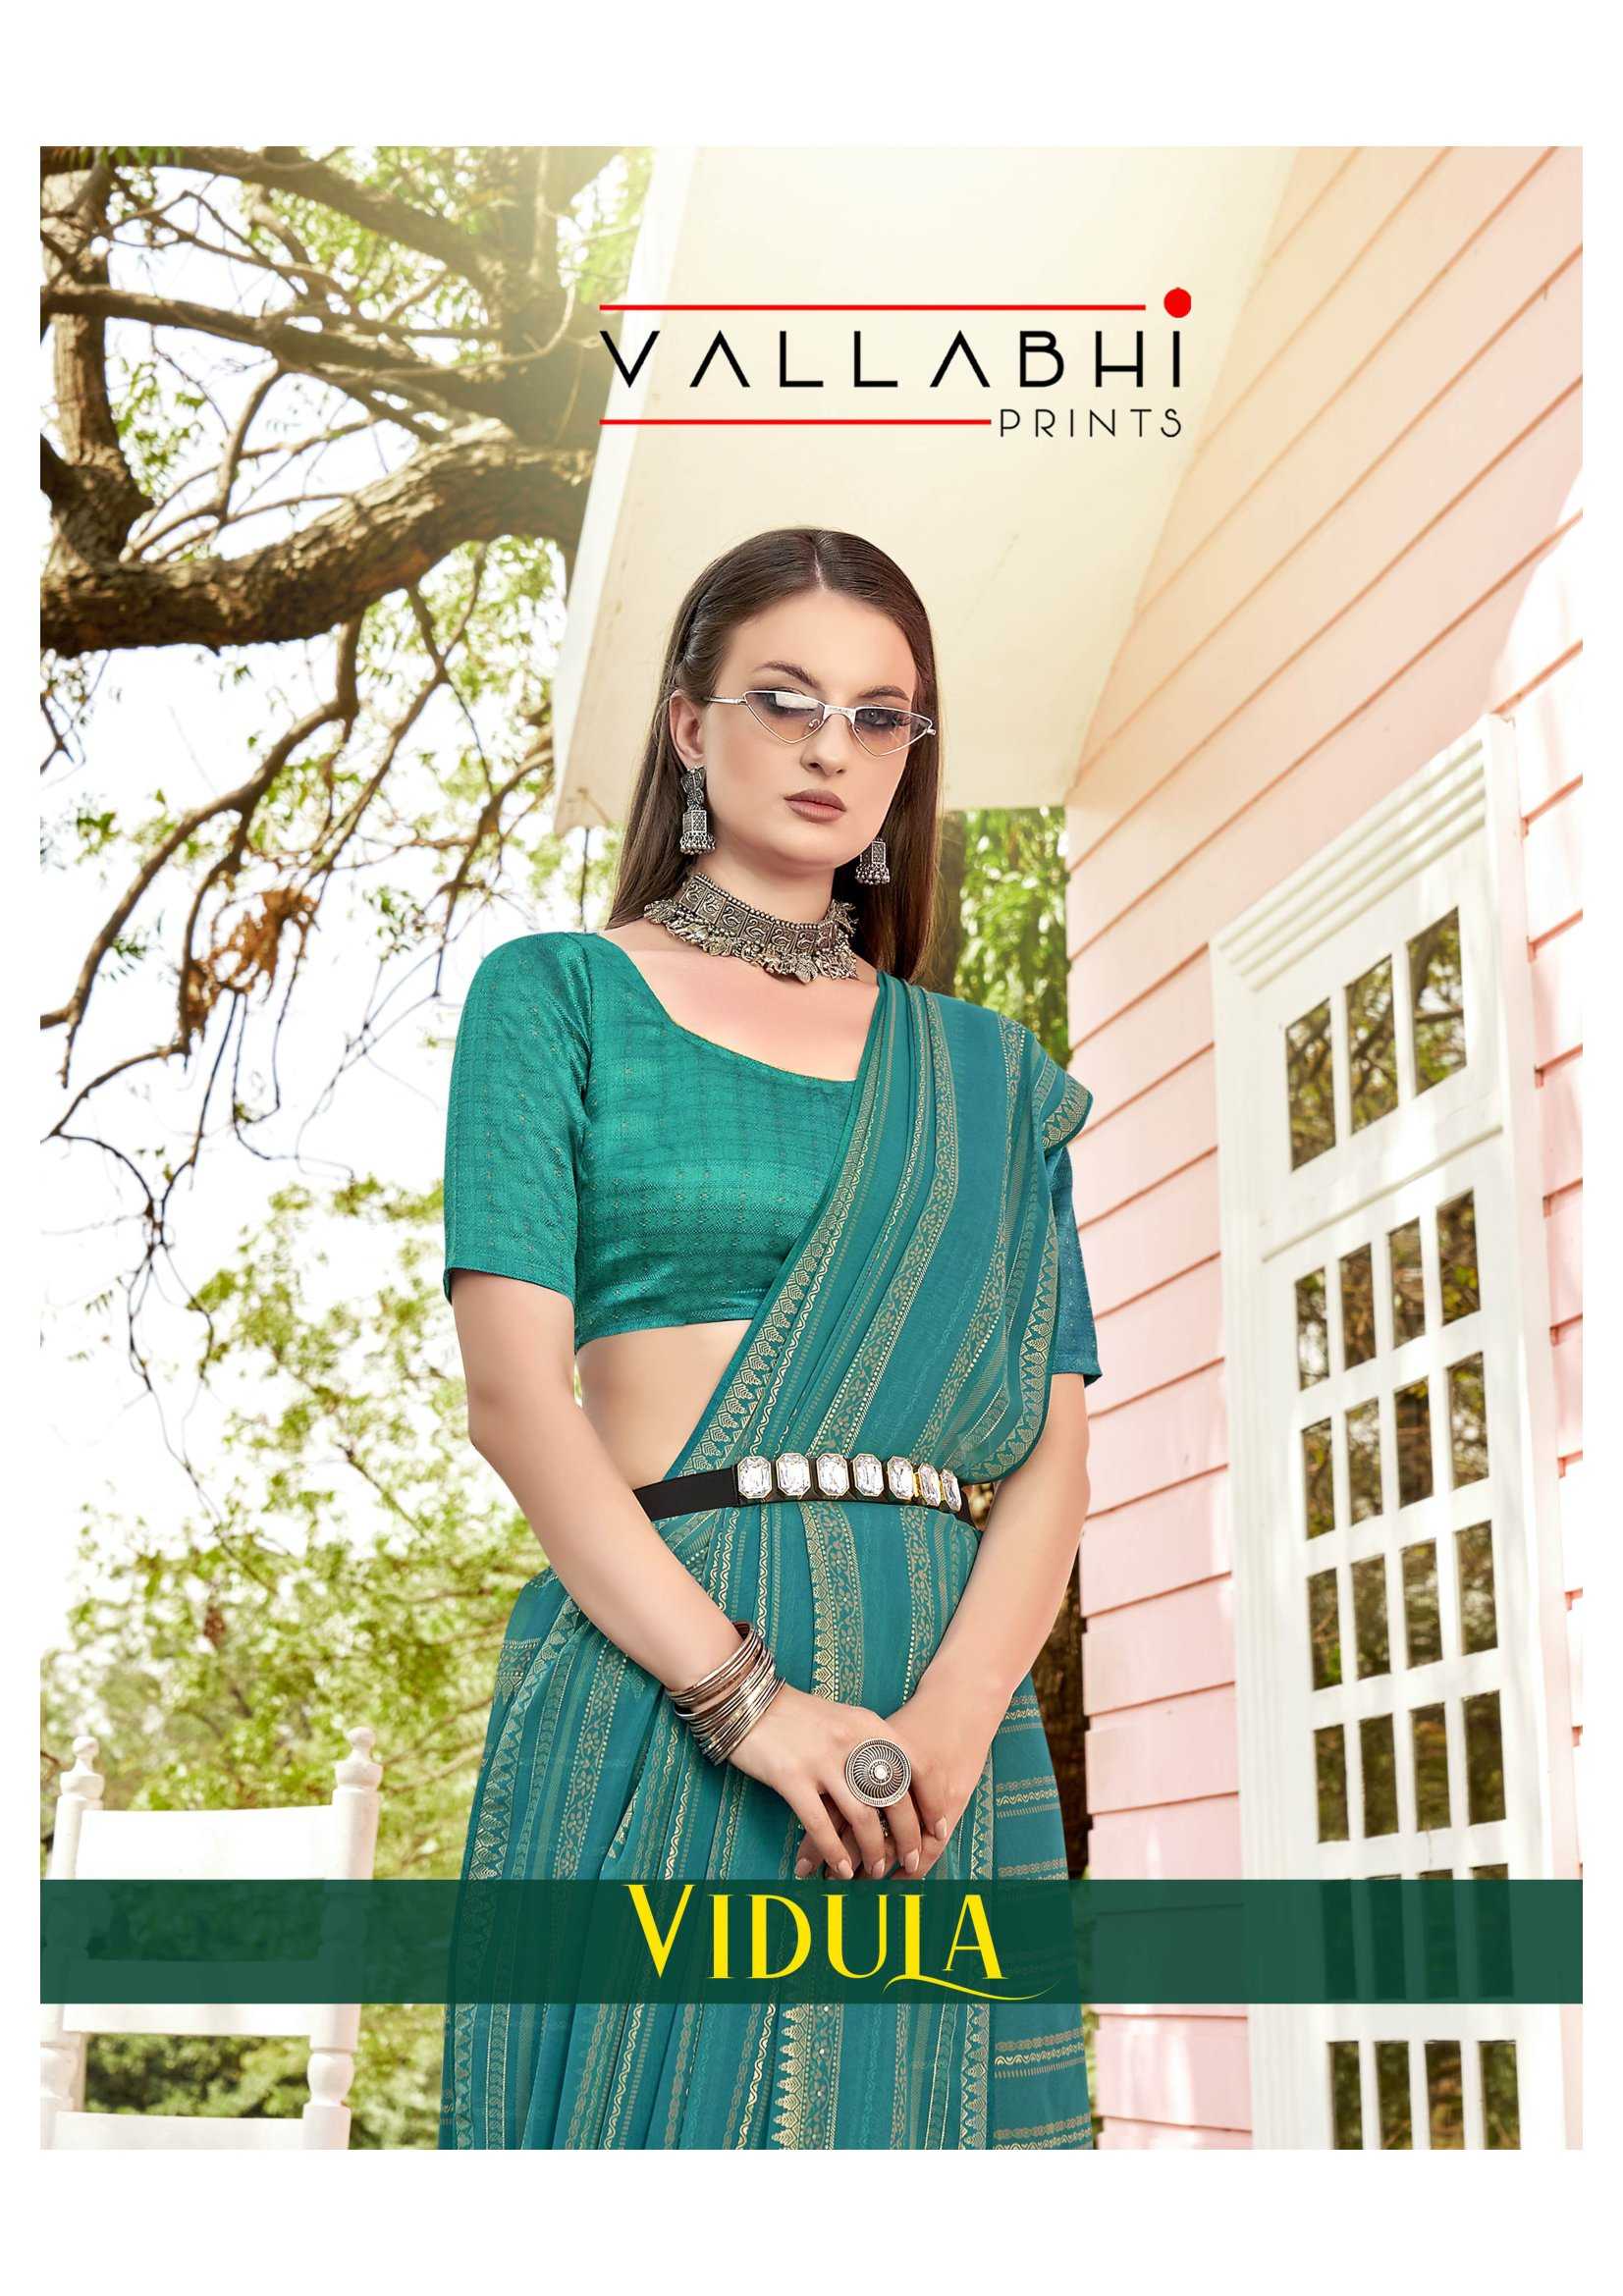 vallabhi prints vidula 26491-26496 amazing style georgette saree exports